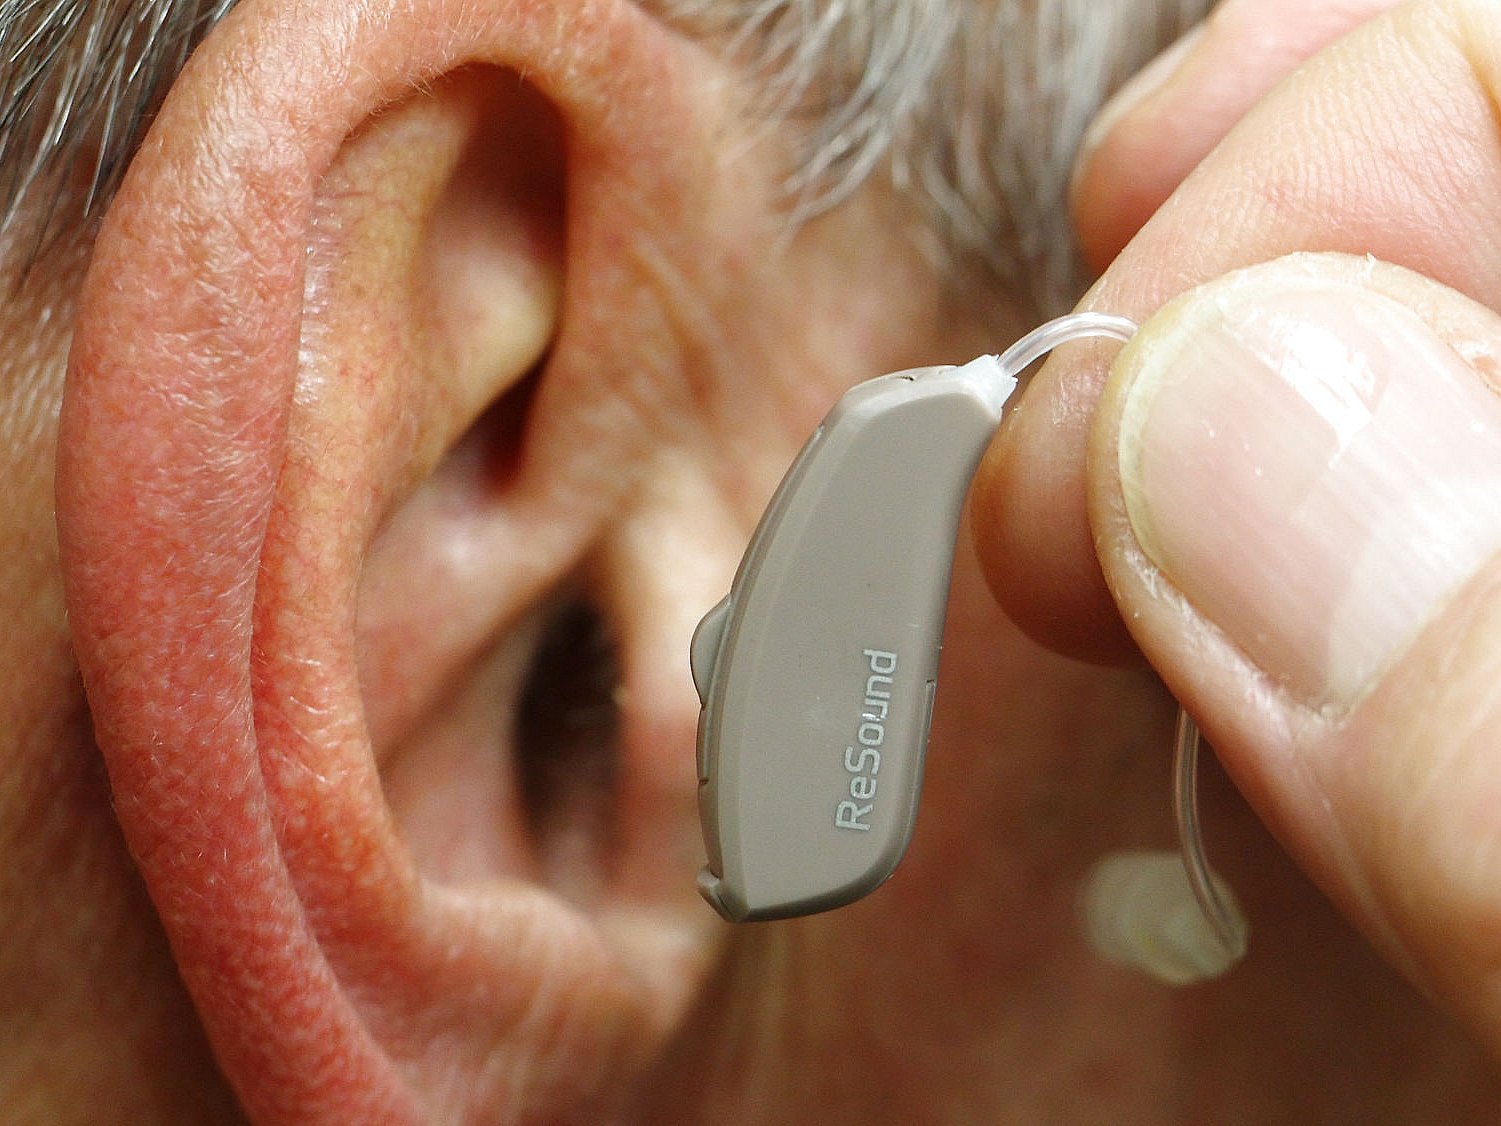 Слуховой аппарат resound. Ресаунд слуховые аппараты. Philips 2 CPX слуховой аппарат. Слуховые аппараты для пожилых людей.